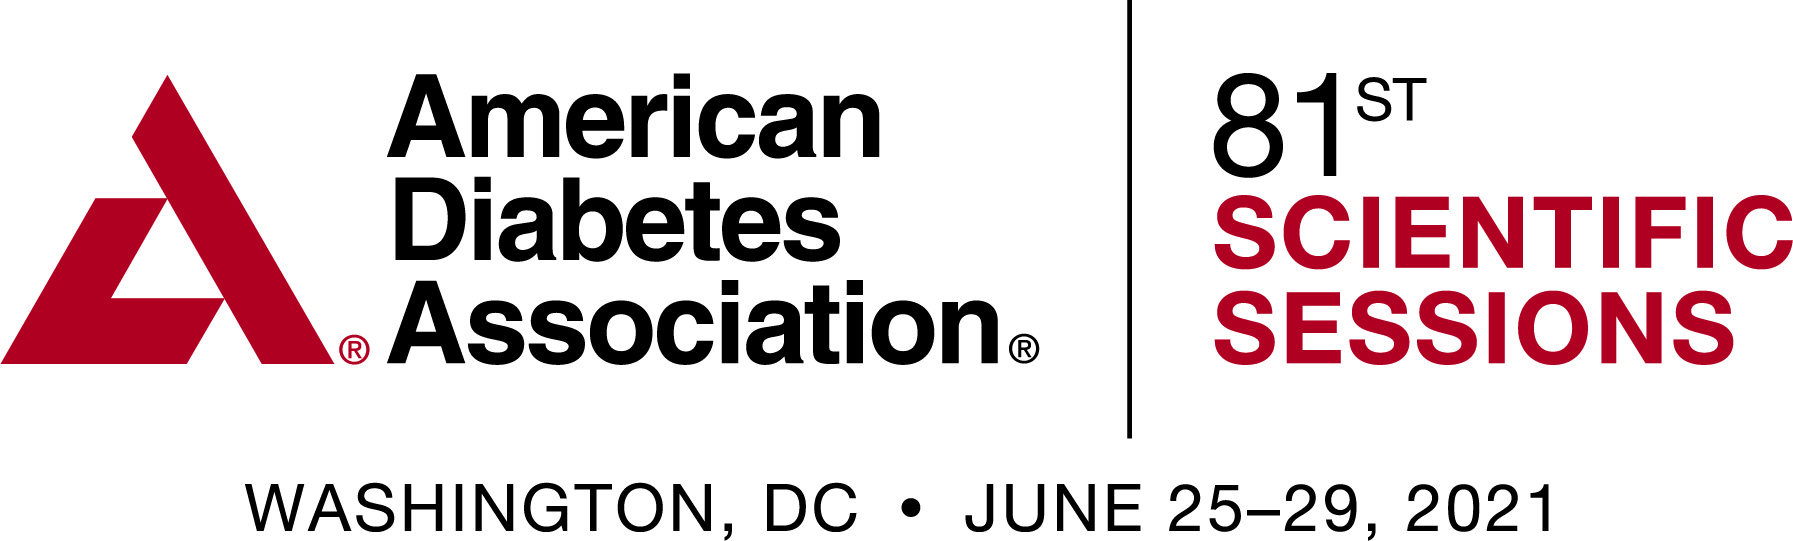 american diabetes association postdoctoral fellowship)